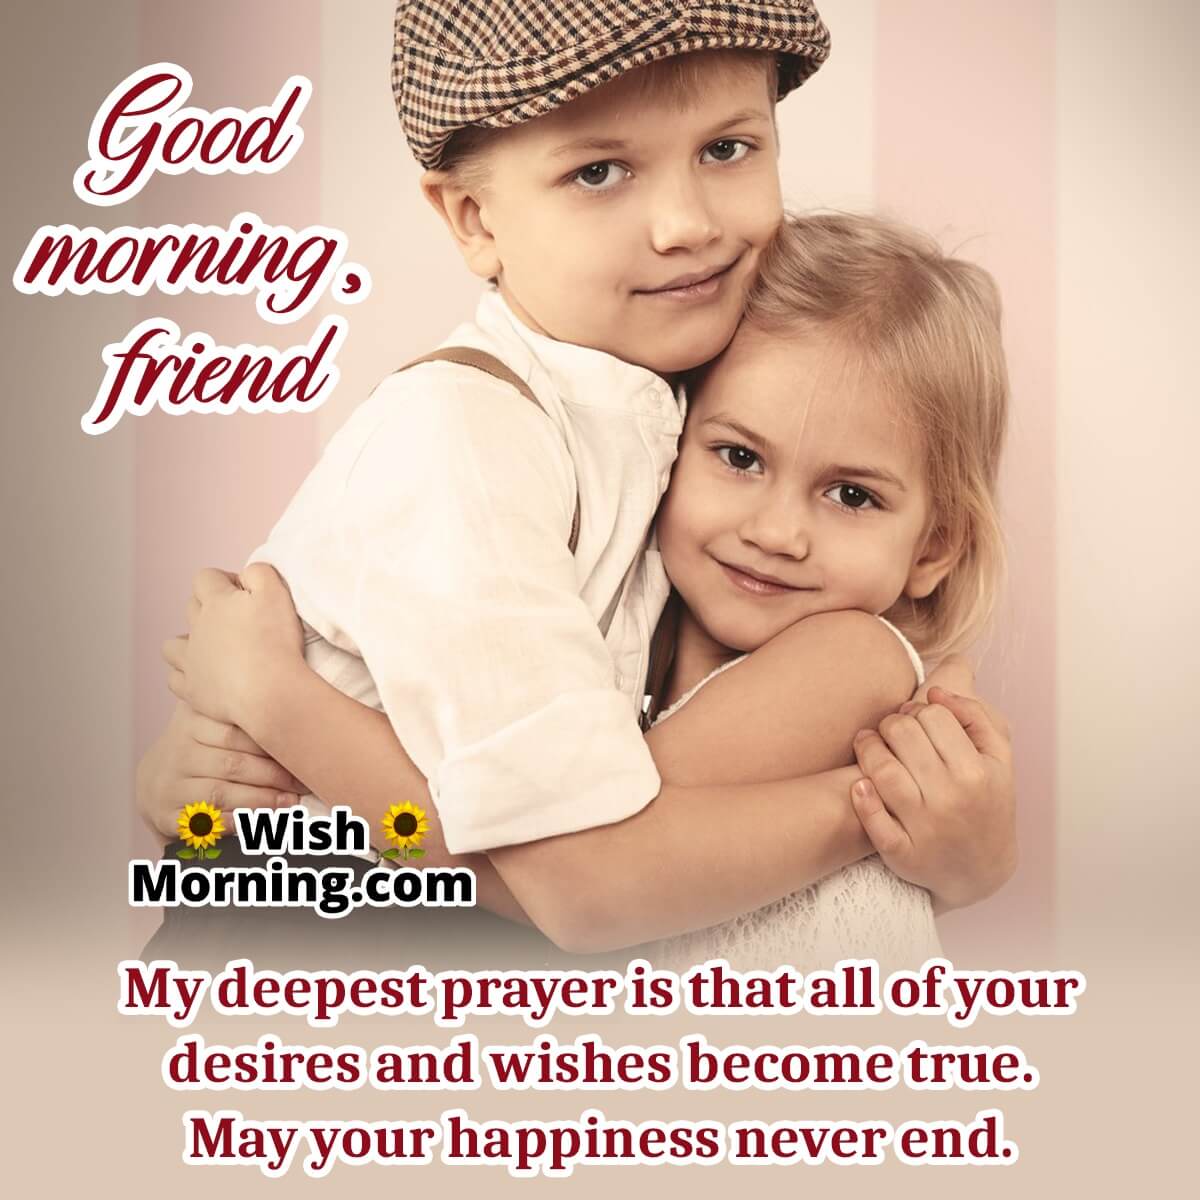 Good Morning Friend Message